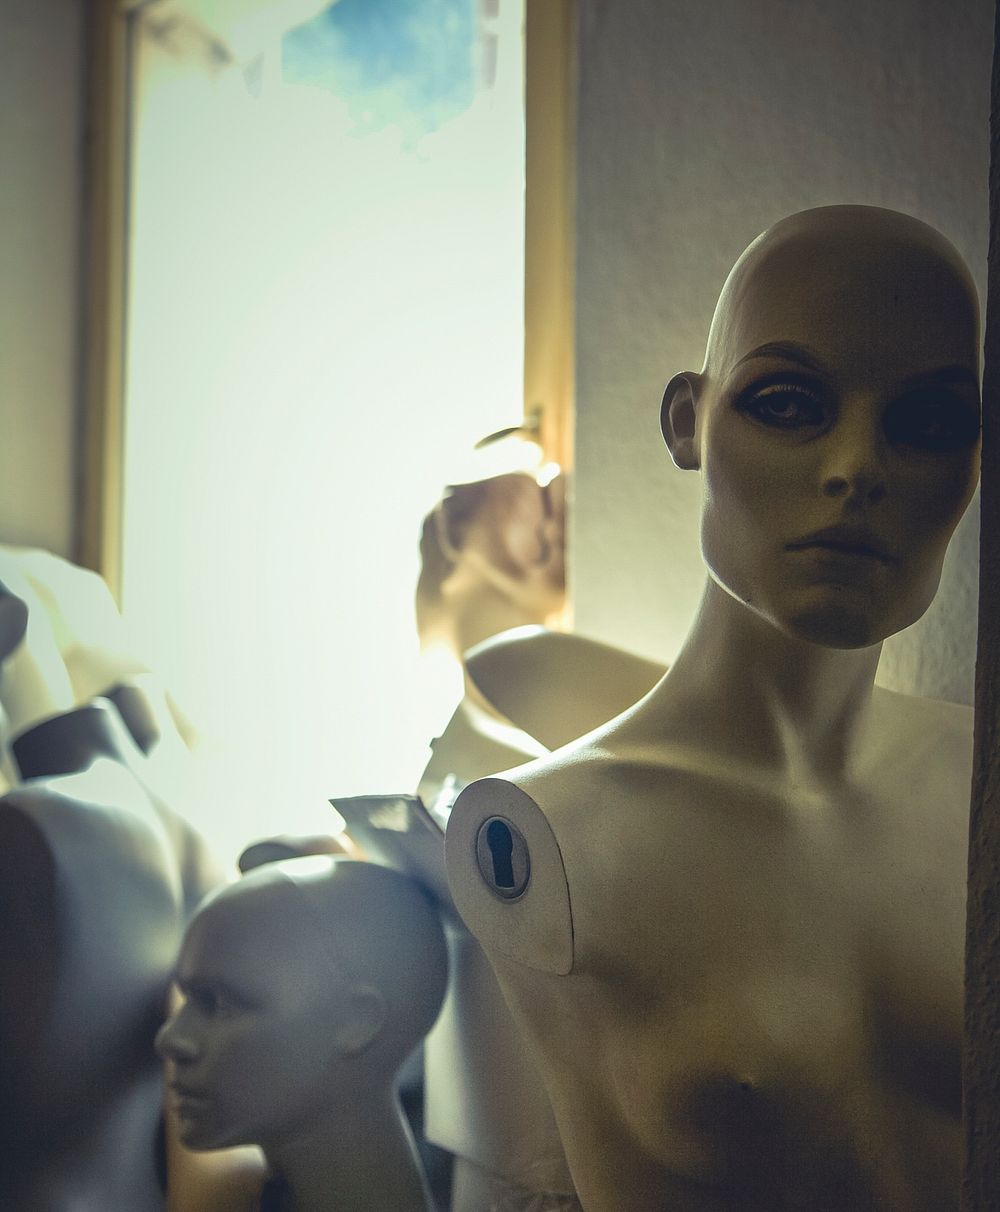 Lifelike mannequins in a storage room